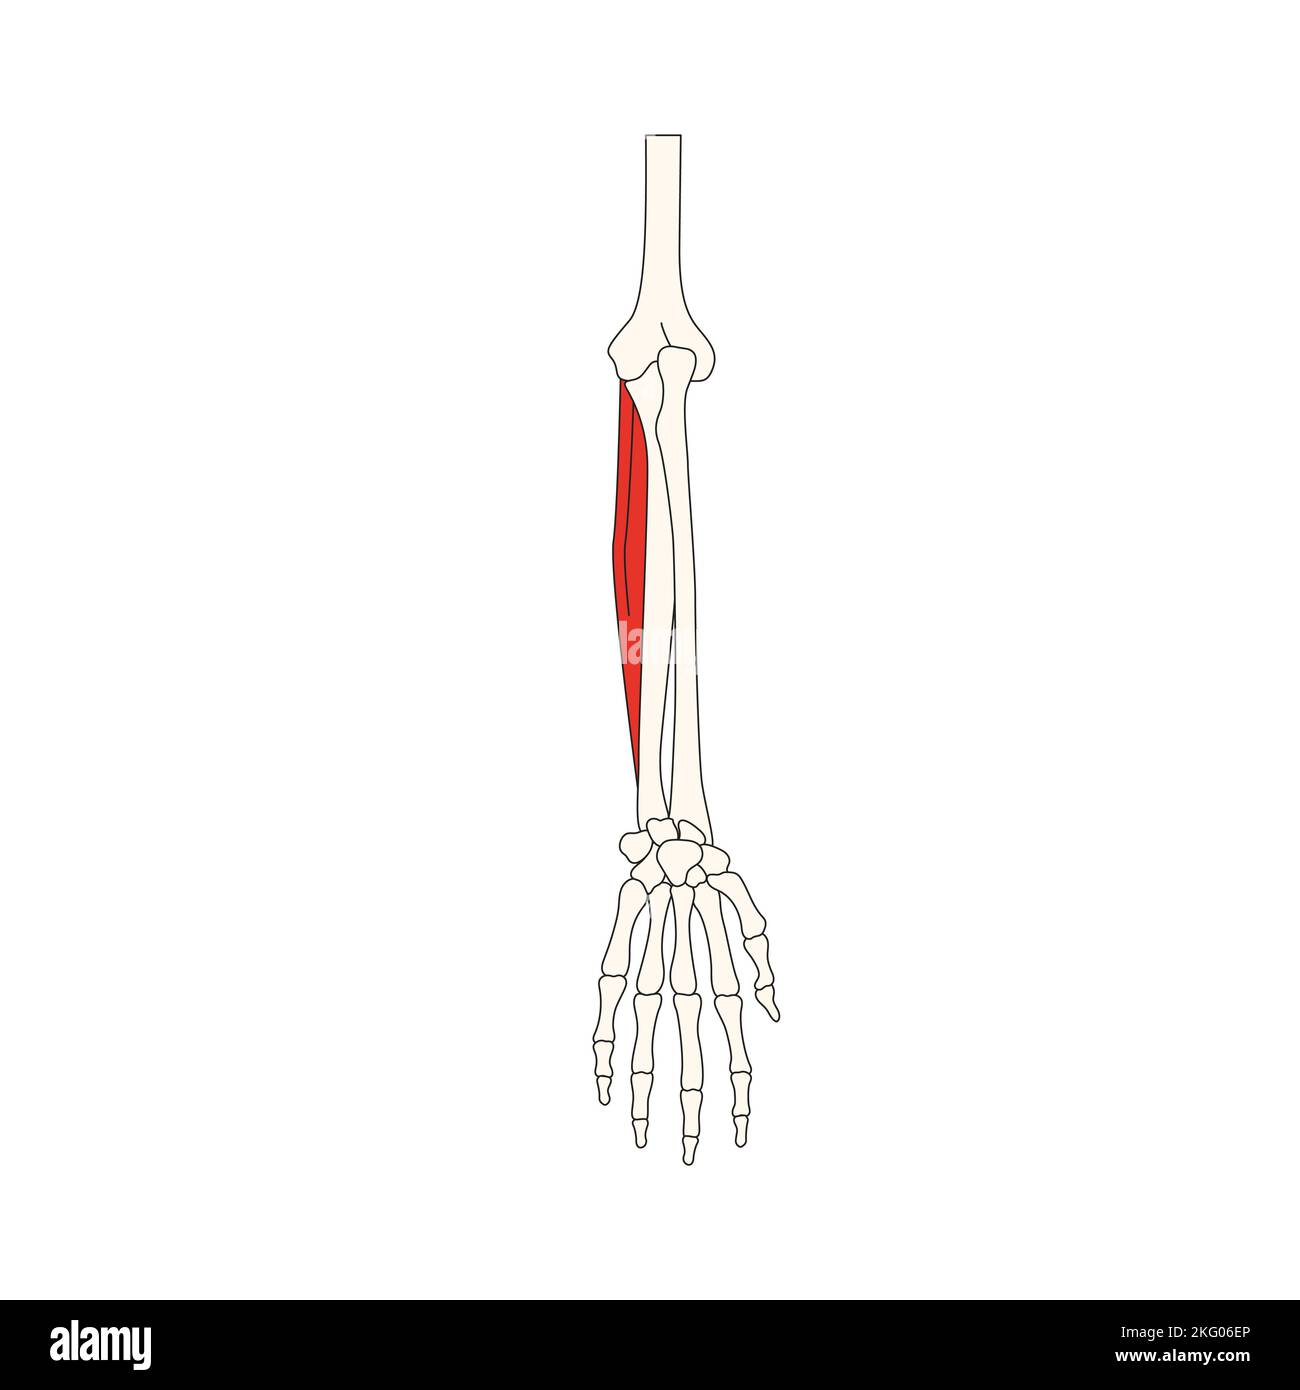 human anatomy drawing flexor carpi ulnaris muscle Stock Photo